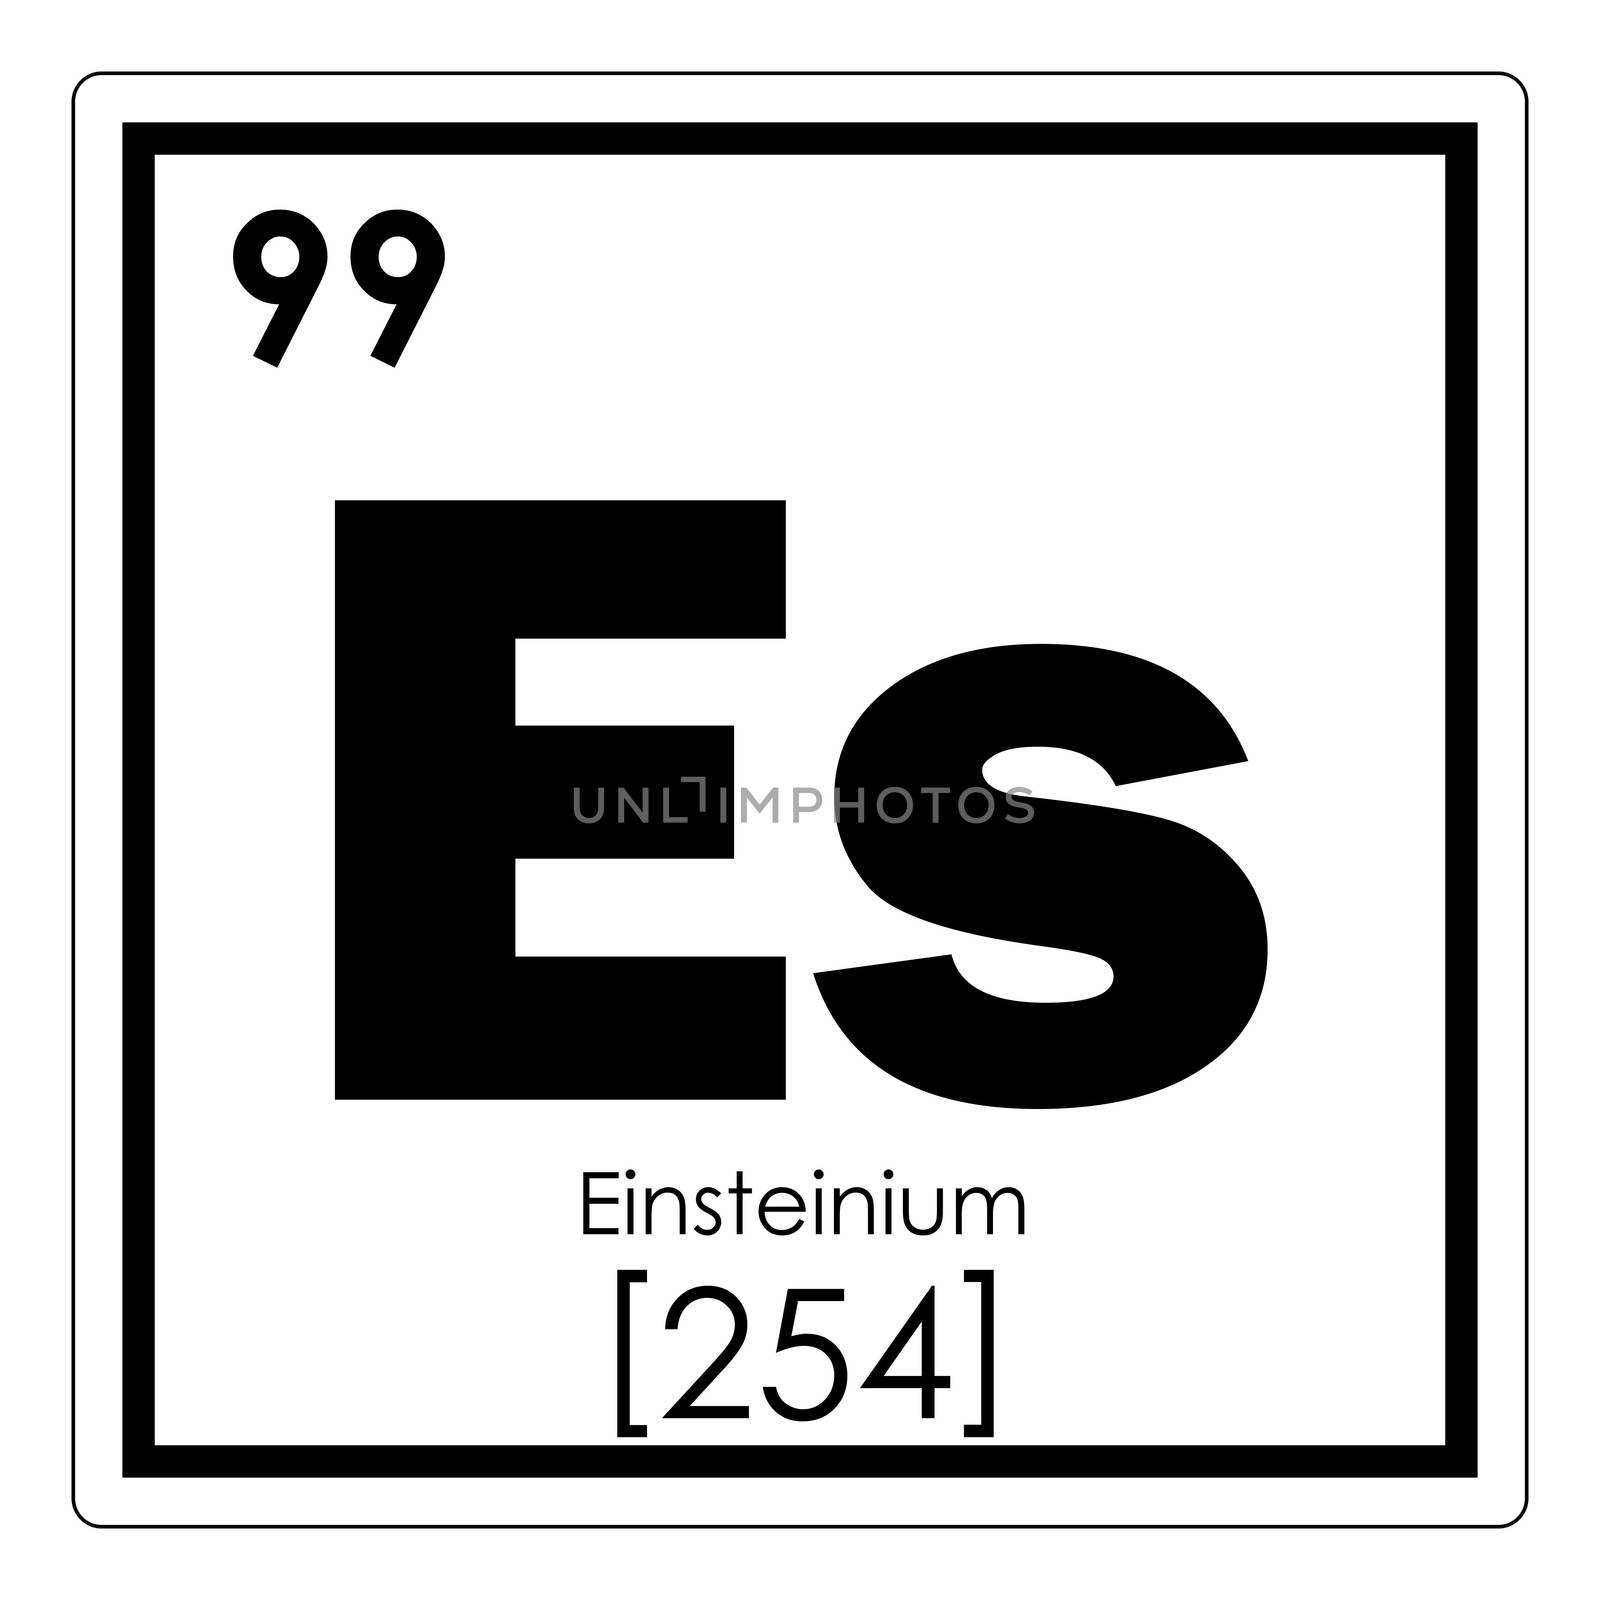 Einsteinium chemical element by tony4urban